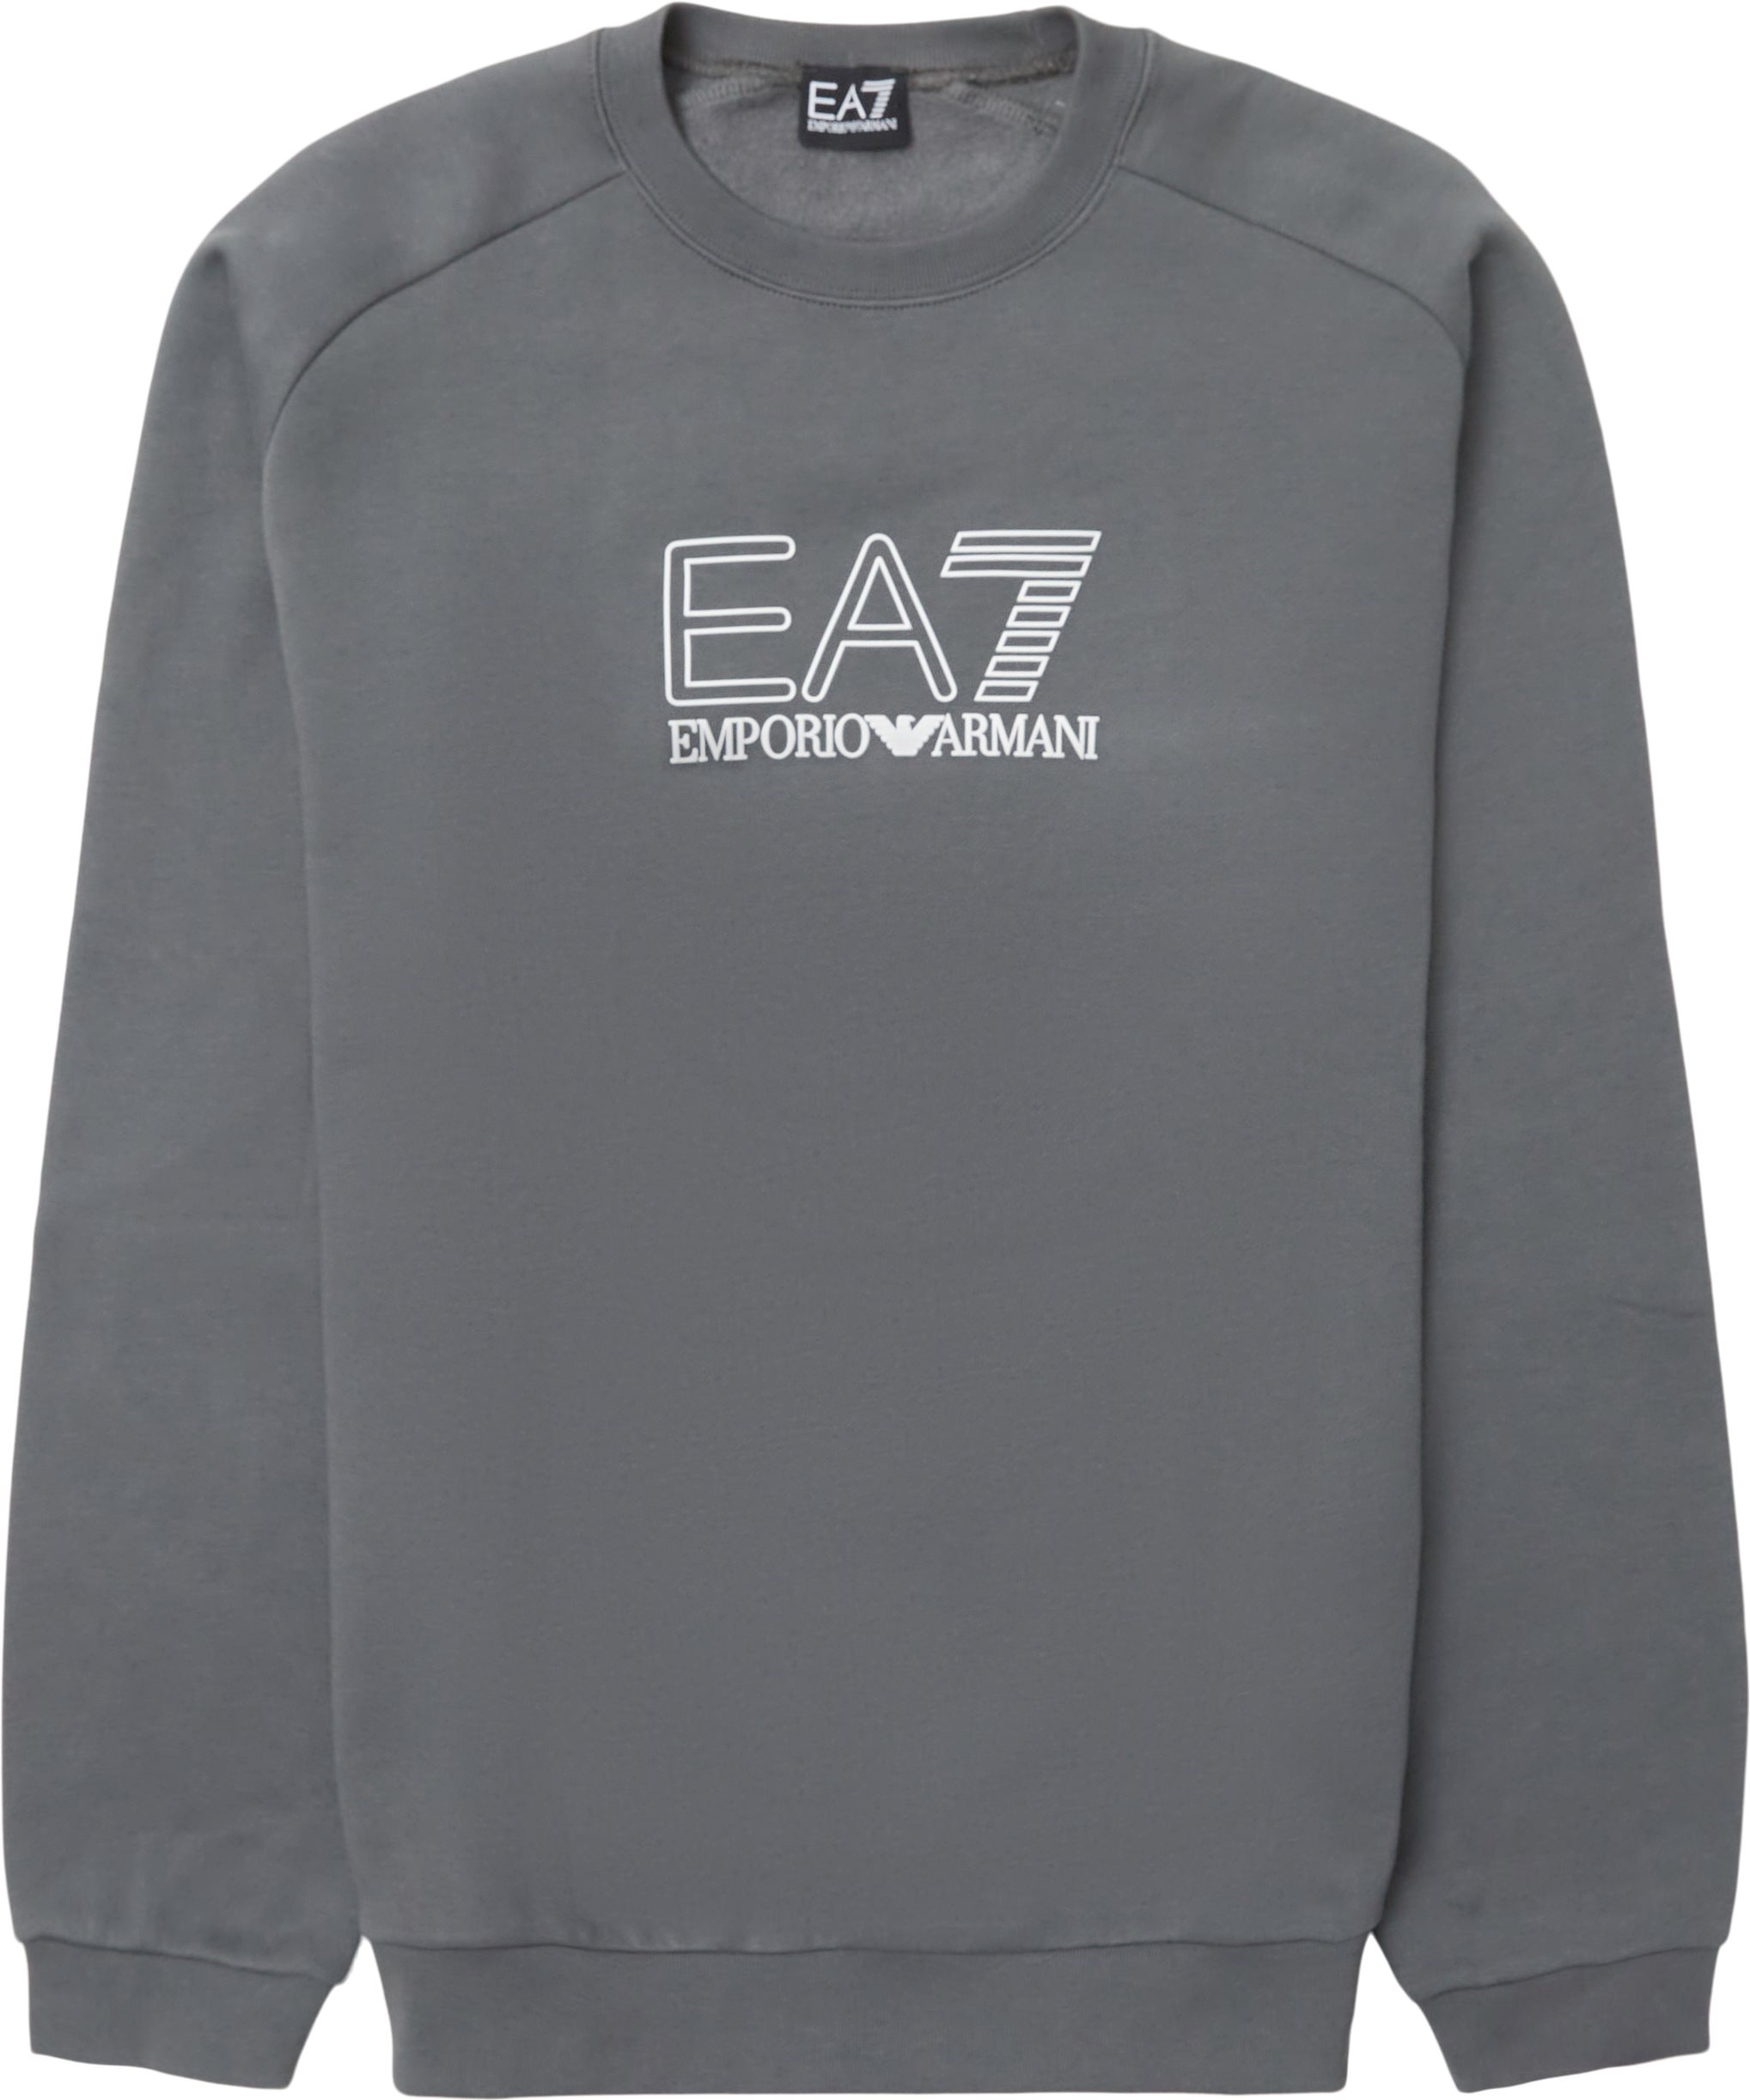 Pj07z-3lpm31 - Sweatshirts - Regular fit - Grey